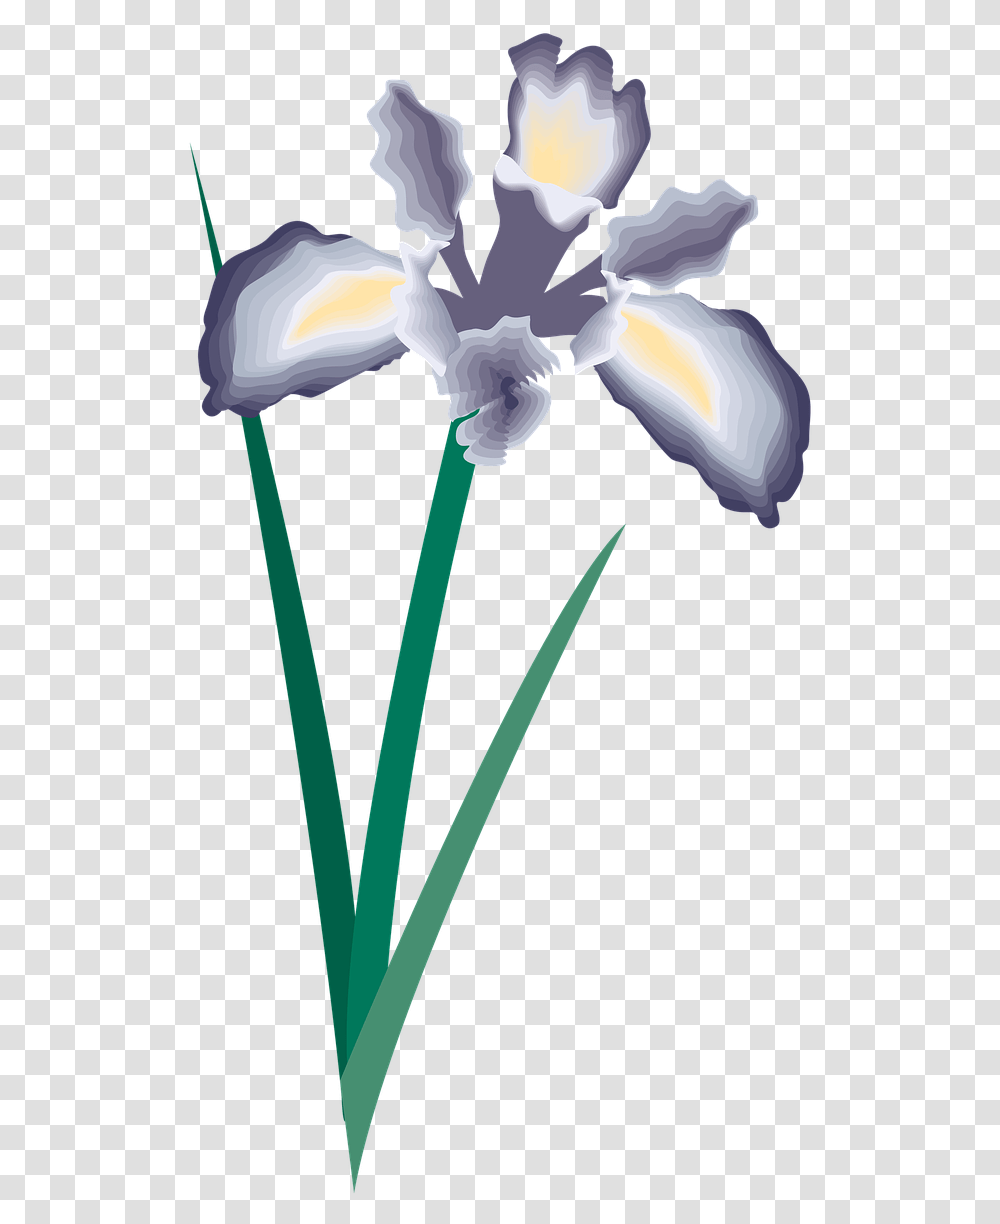 Flower Icon Symbol Free Image On Pixabay Clipart Decoration, Plant, Petal, Iris, Daffodil Transparent Png